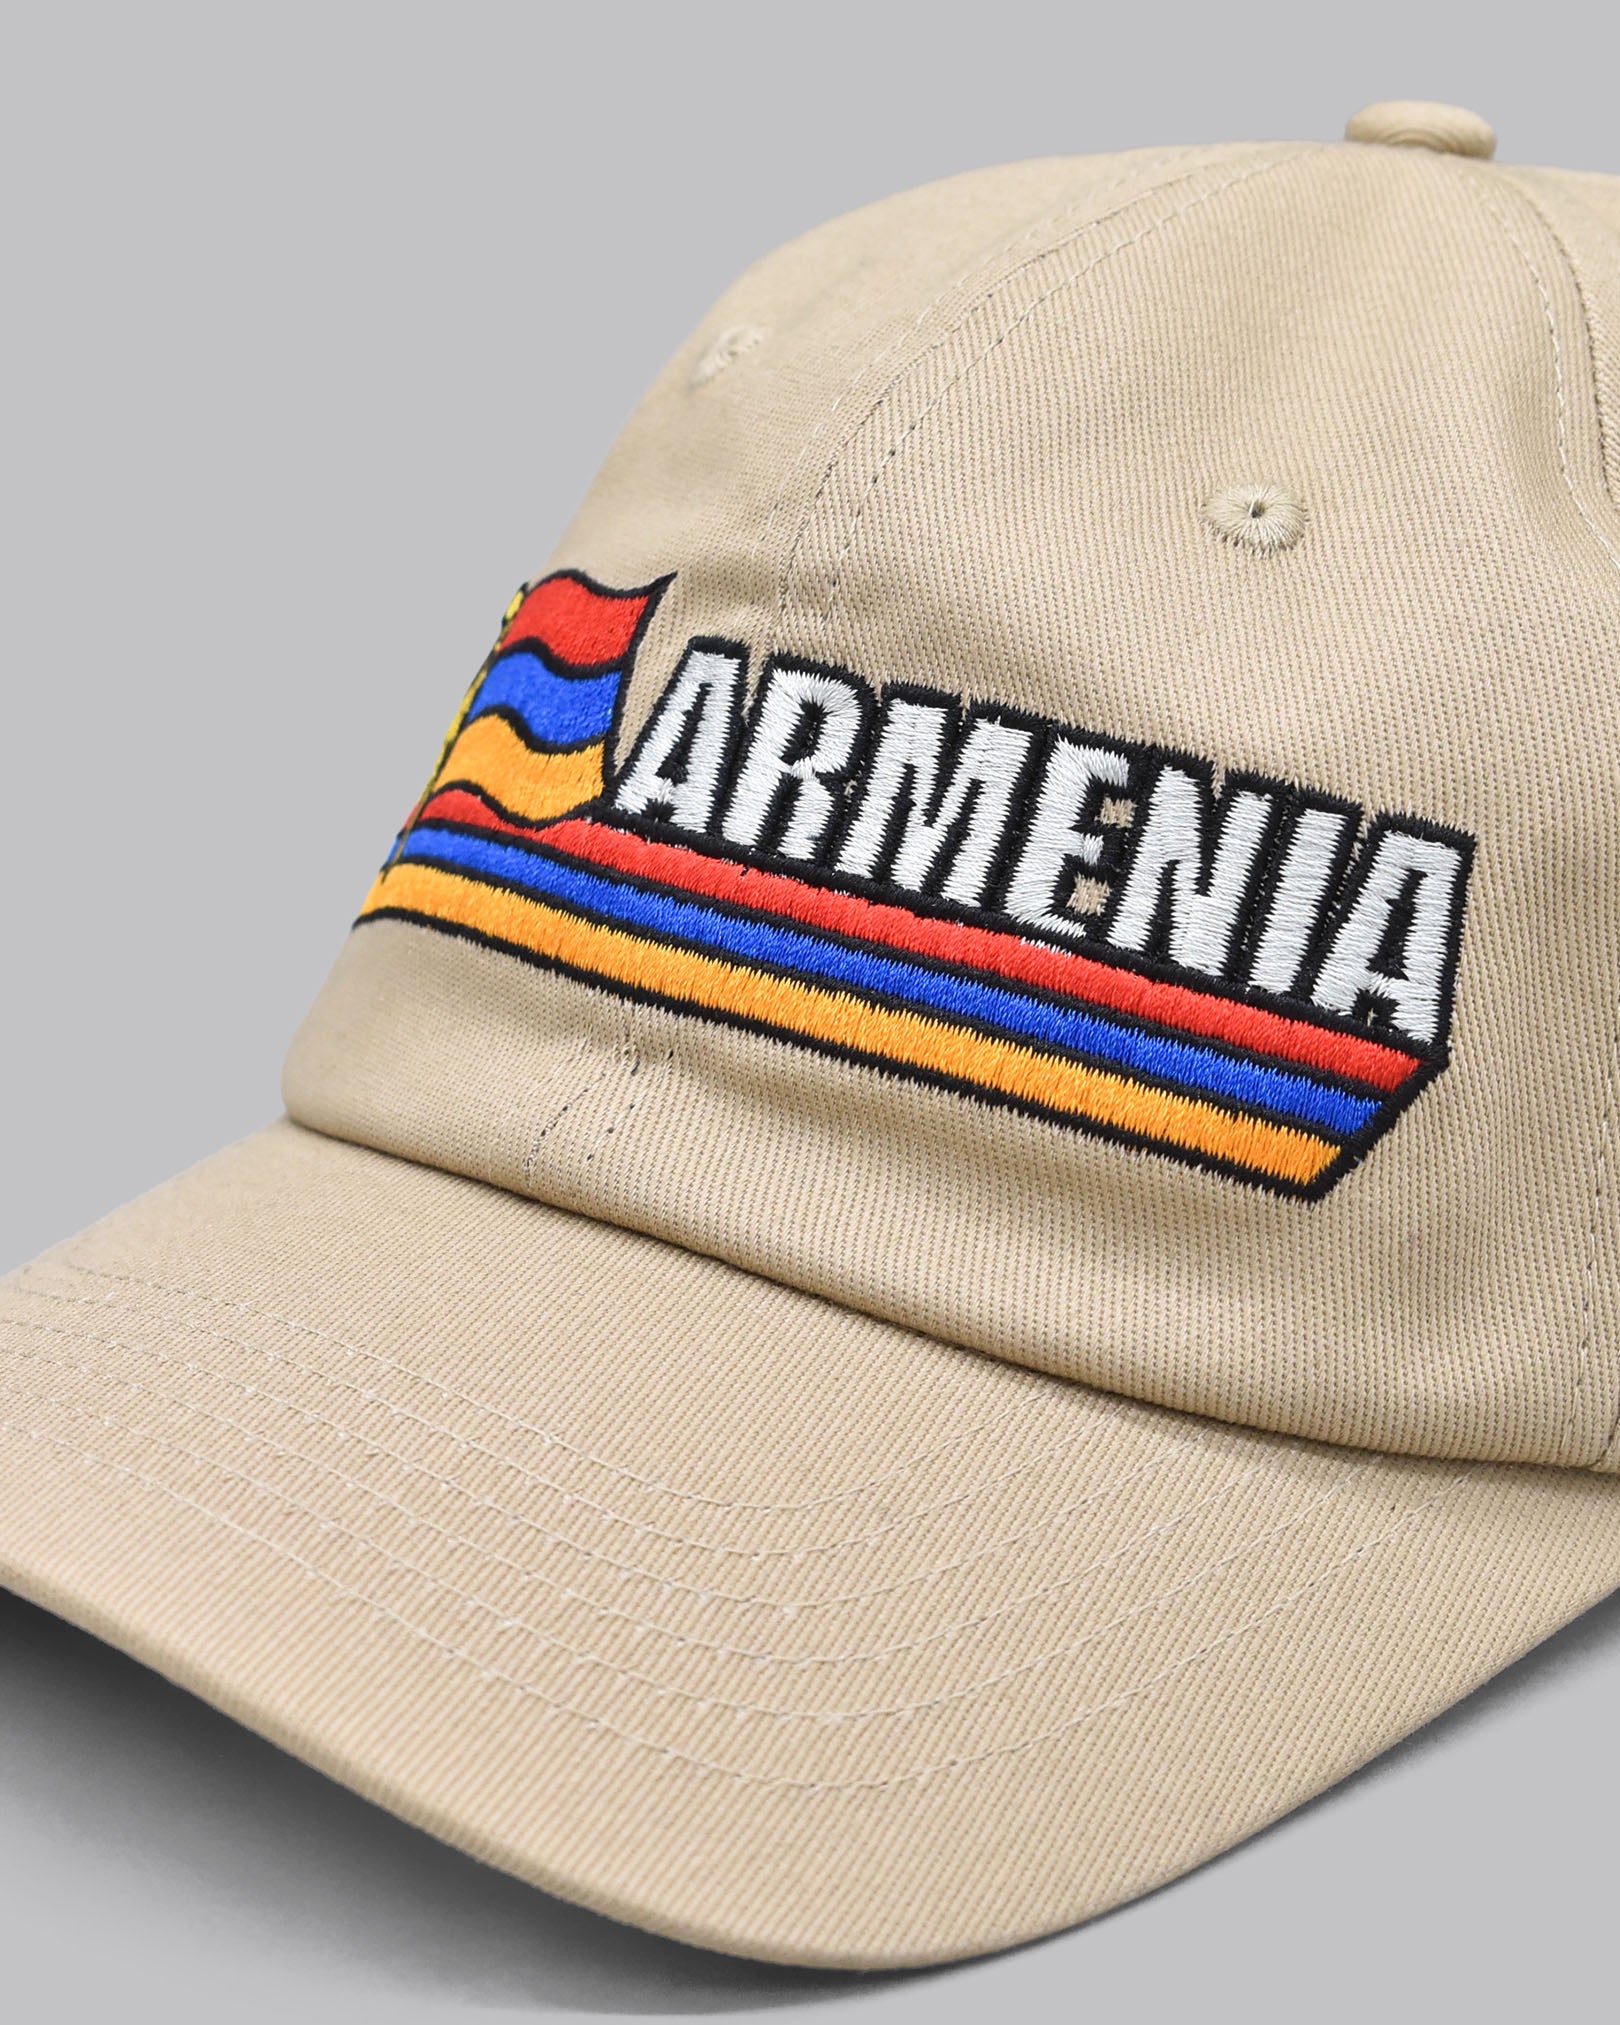 90s Armenia Heritage Cap (As Worn By Charles Aznavour)